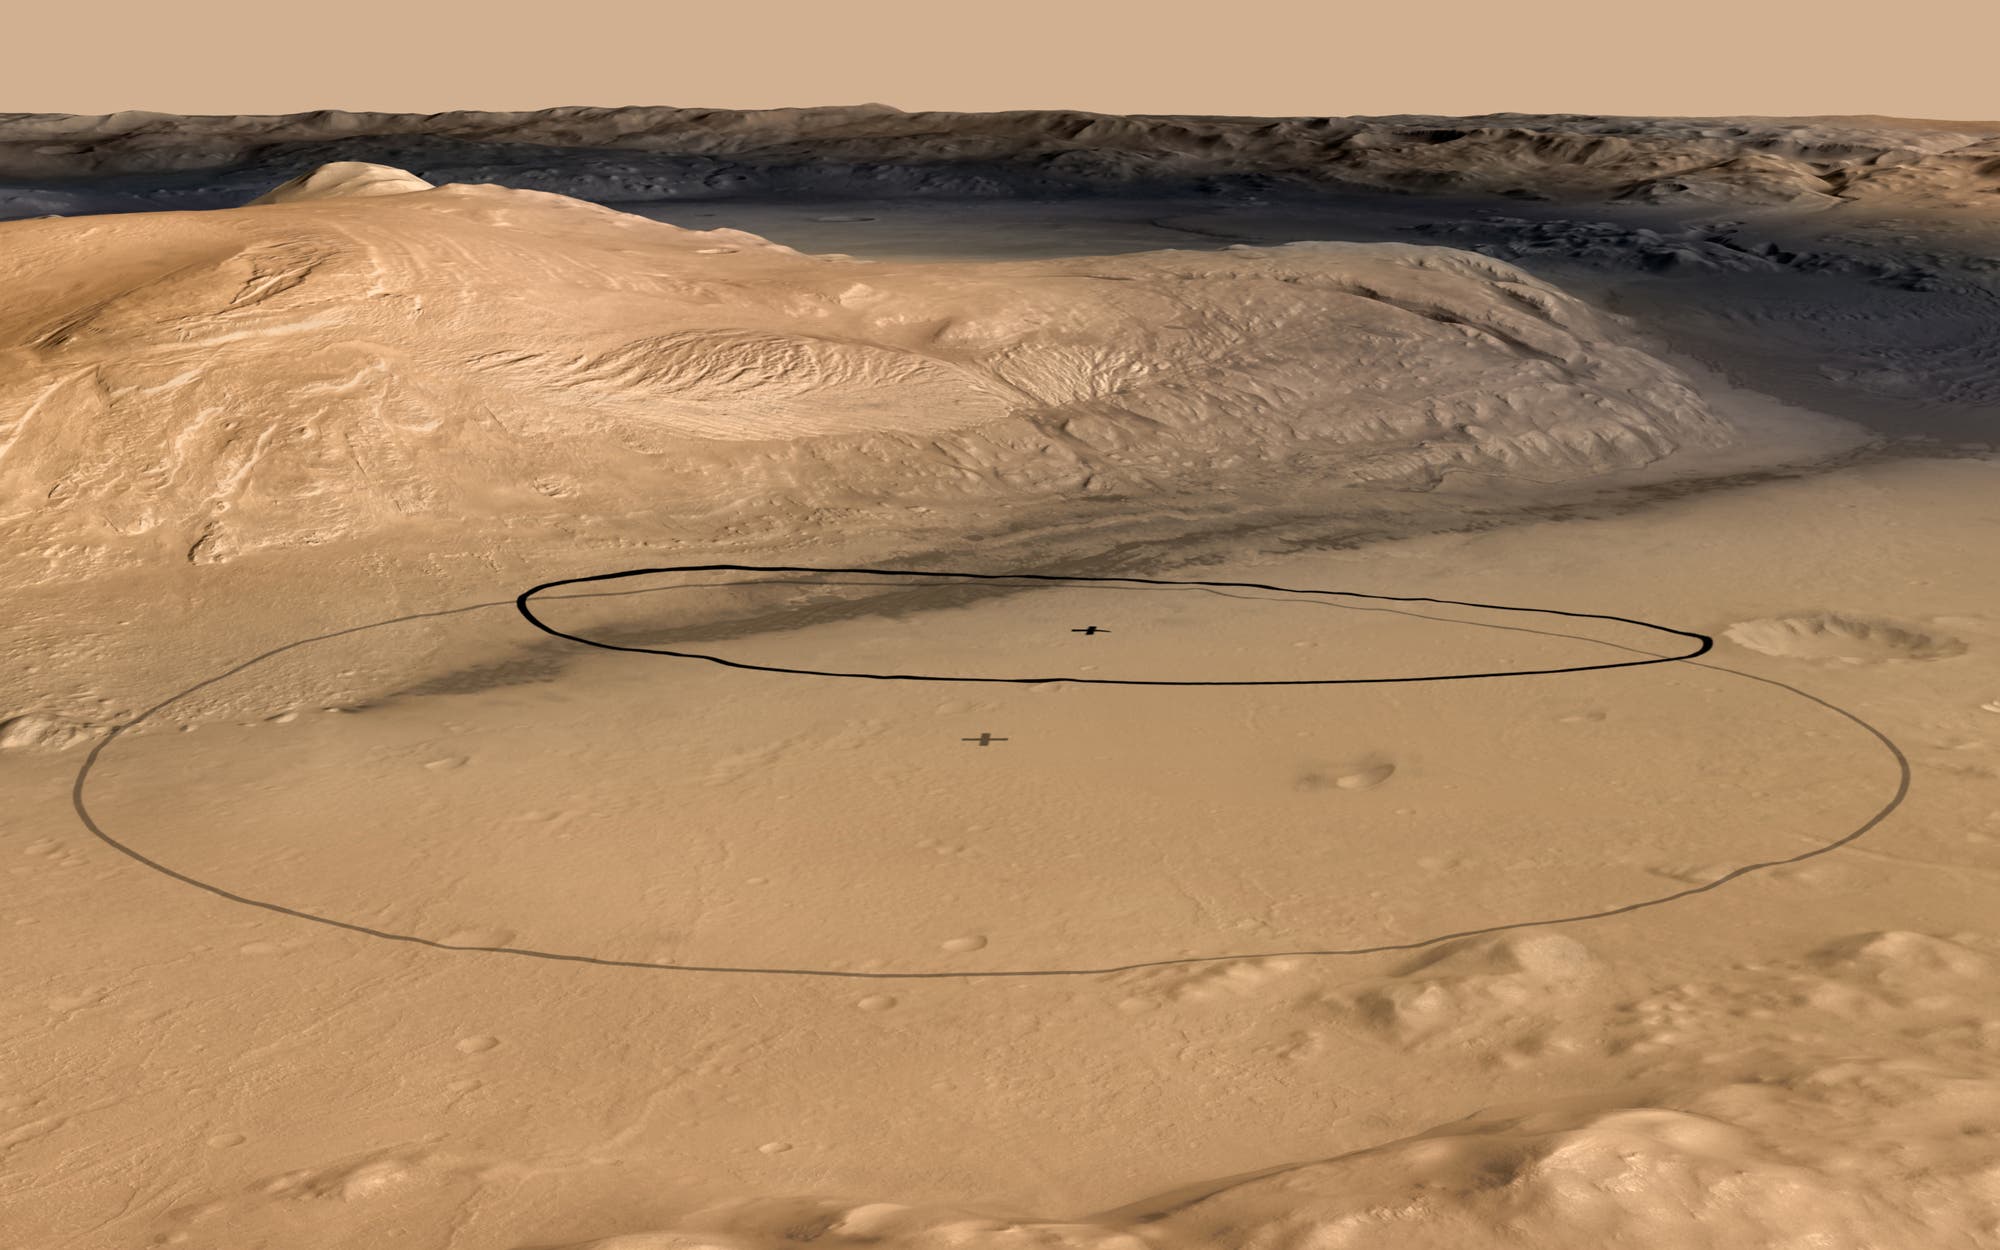 Das Landegebiet des Marsrovers Curiosity